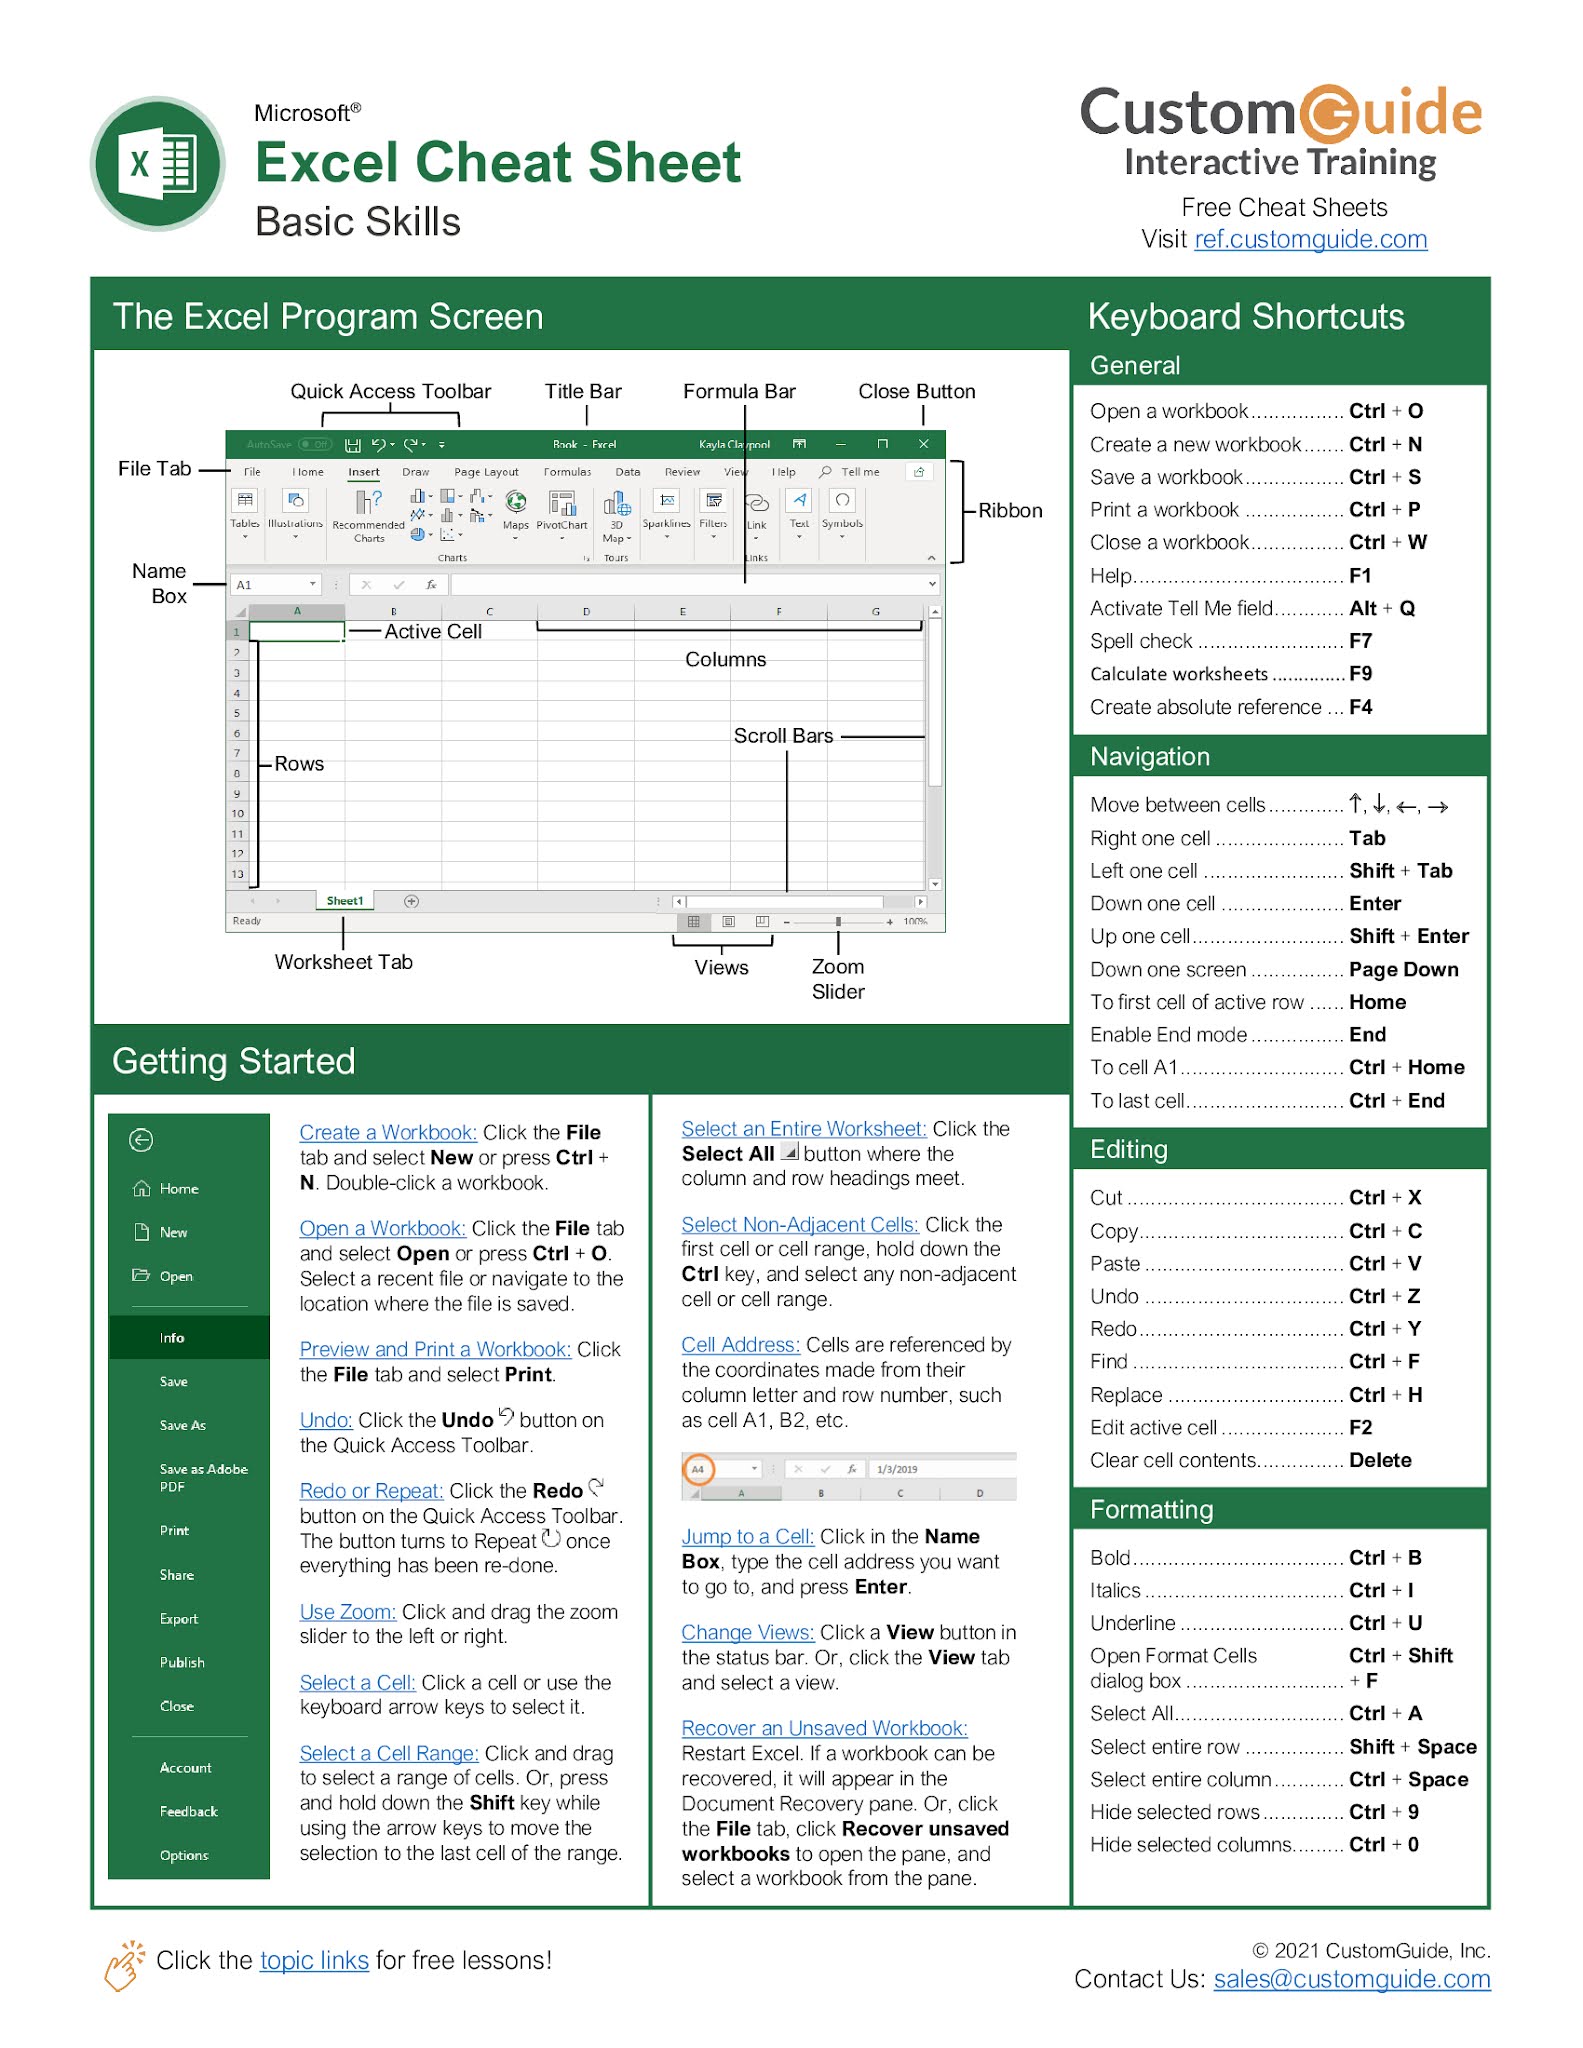 Excel Cheat Sheet 2021 FREE PDF – CustomGuide